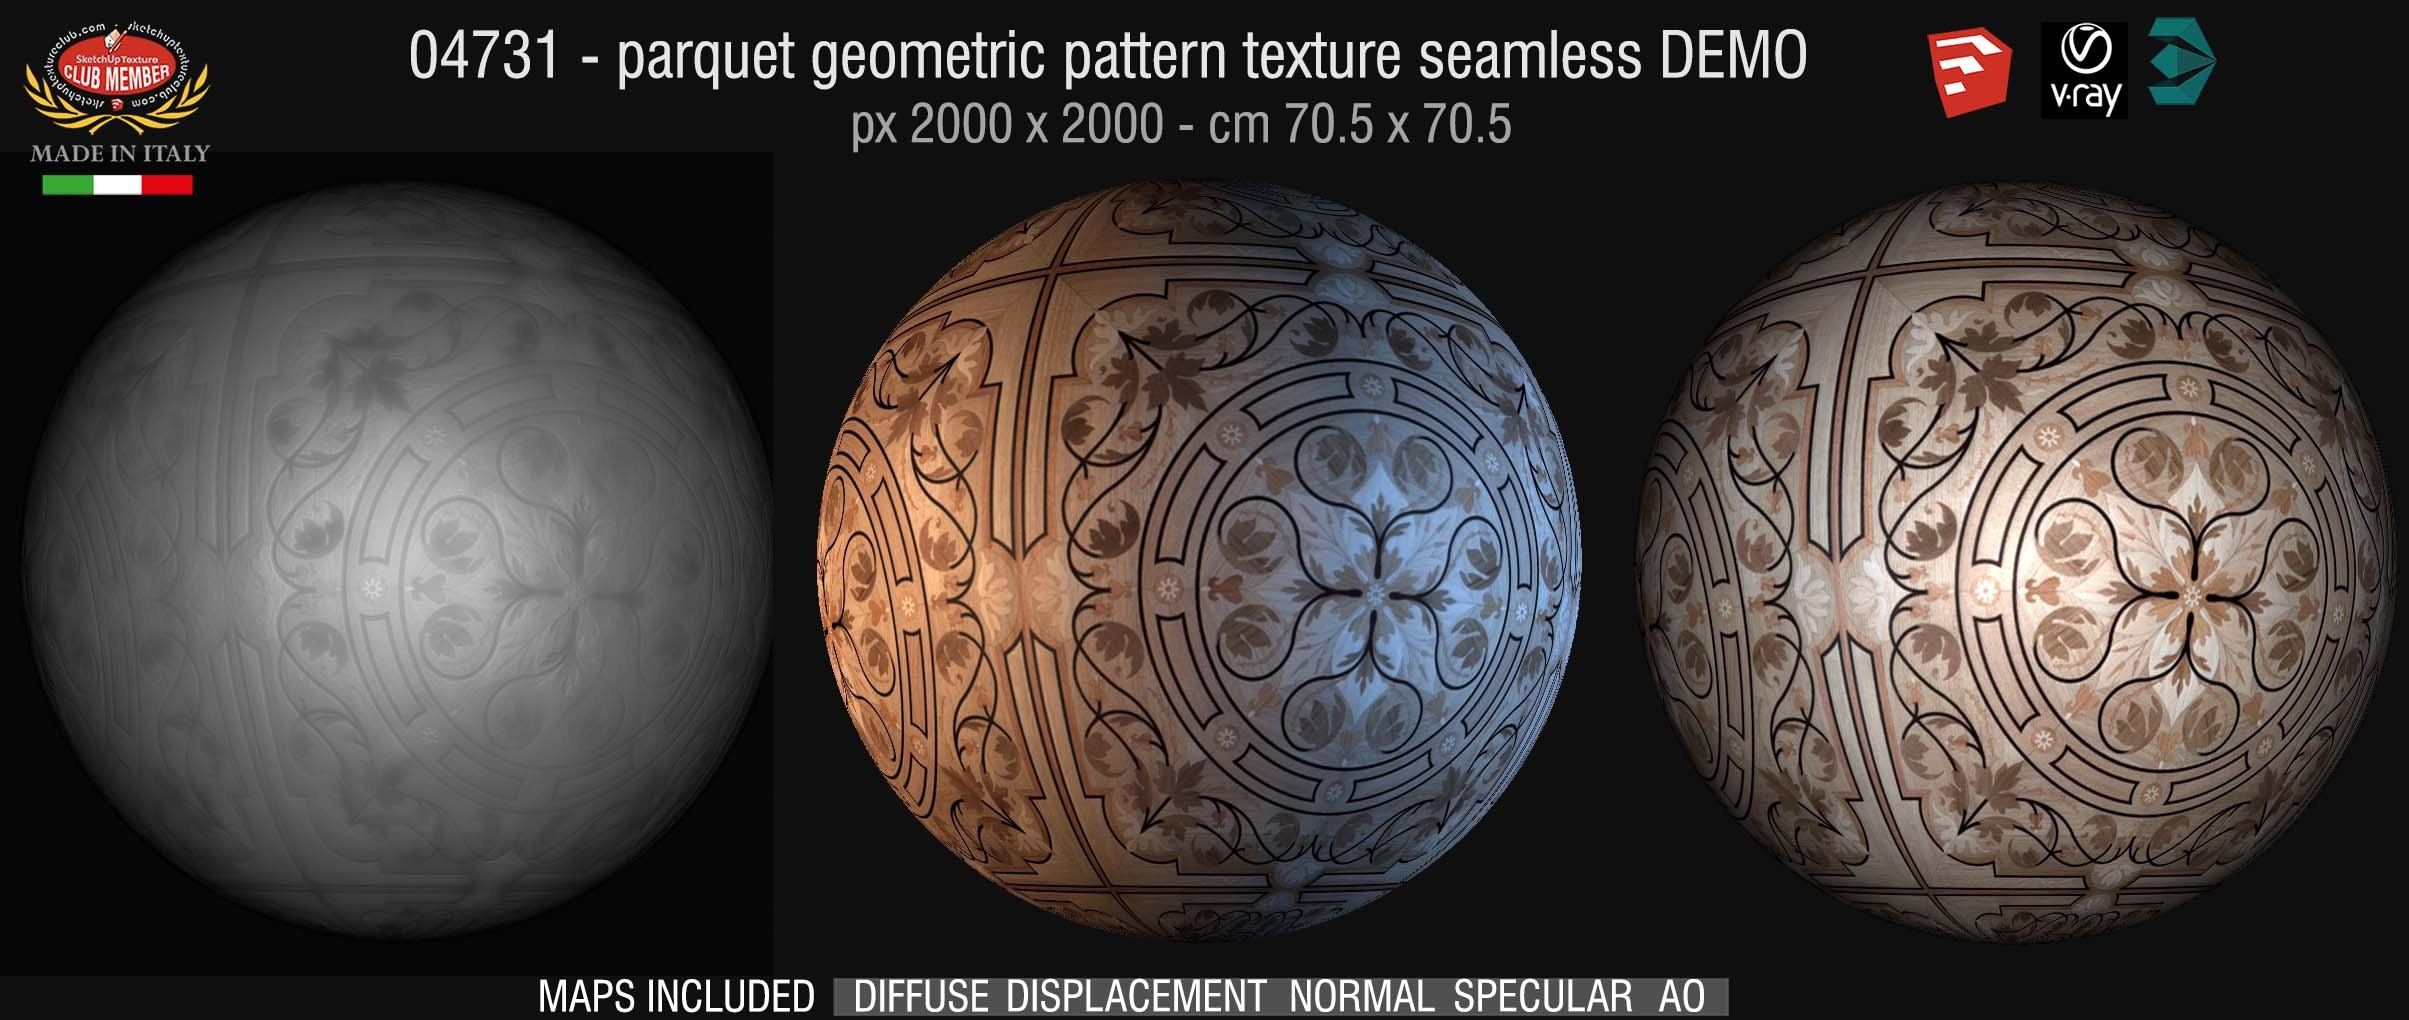 04731 HR Parquet geometric pattern texture seamless + maps DEMO